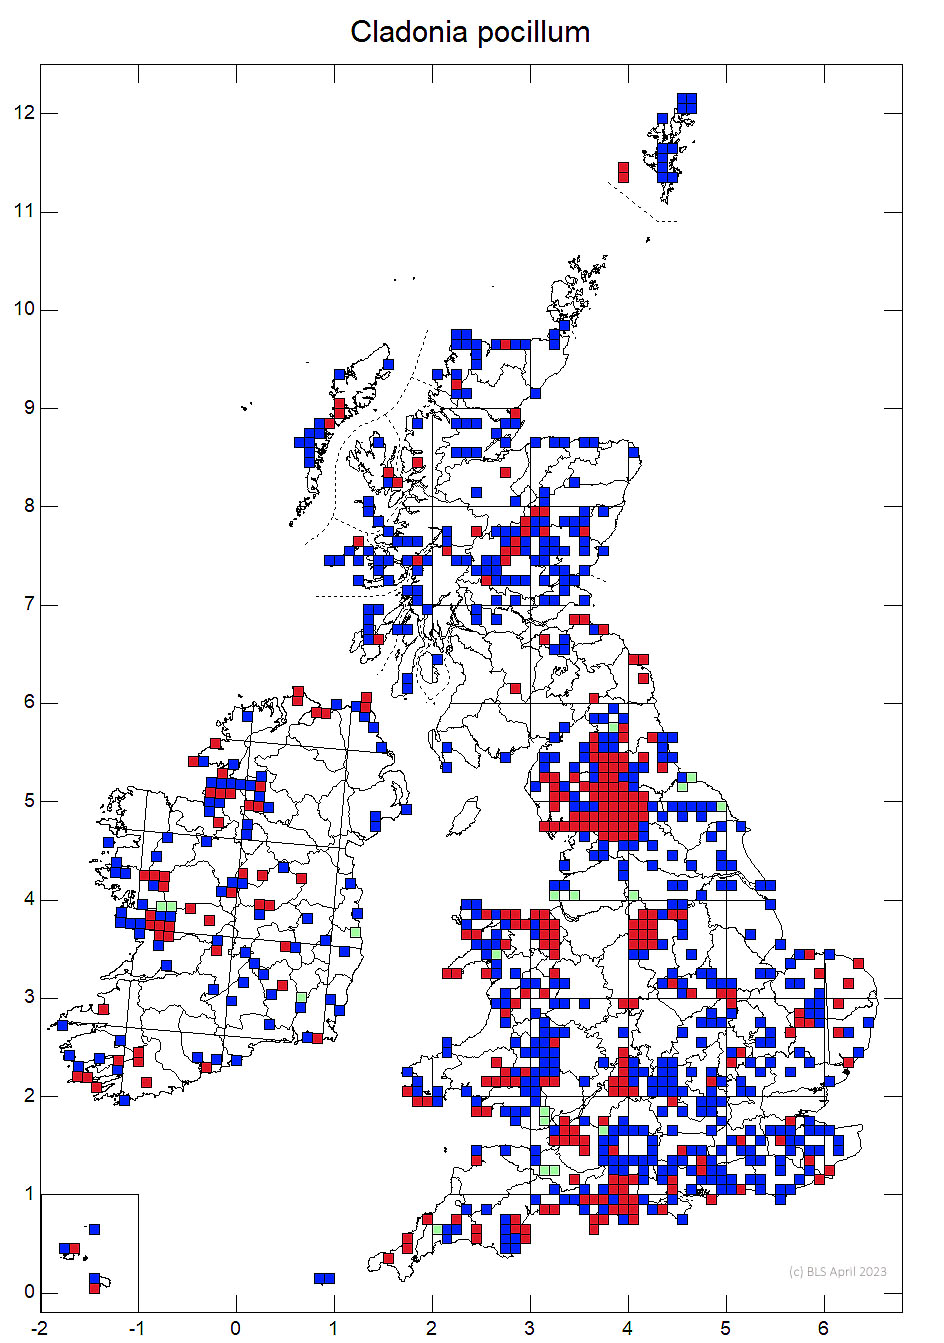 Cladonia pocillum 10km sq distribution map